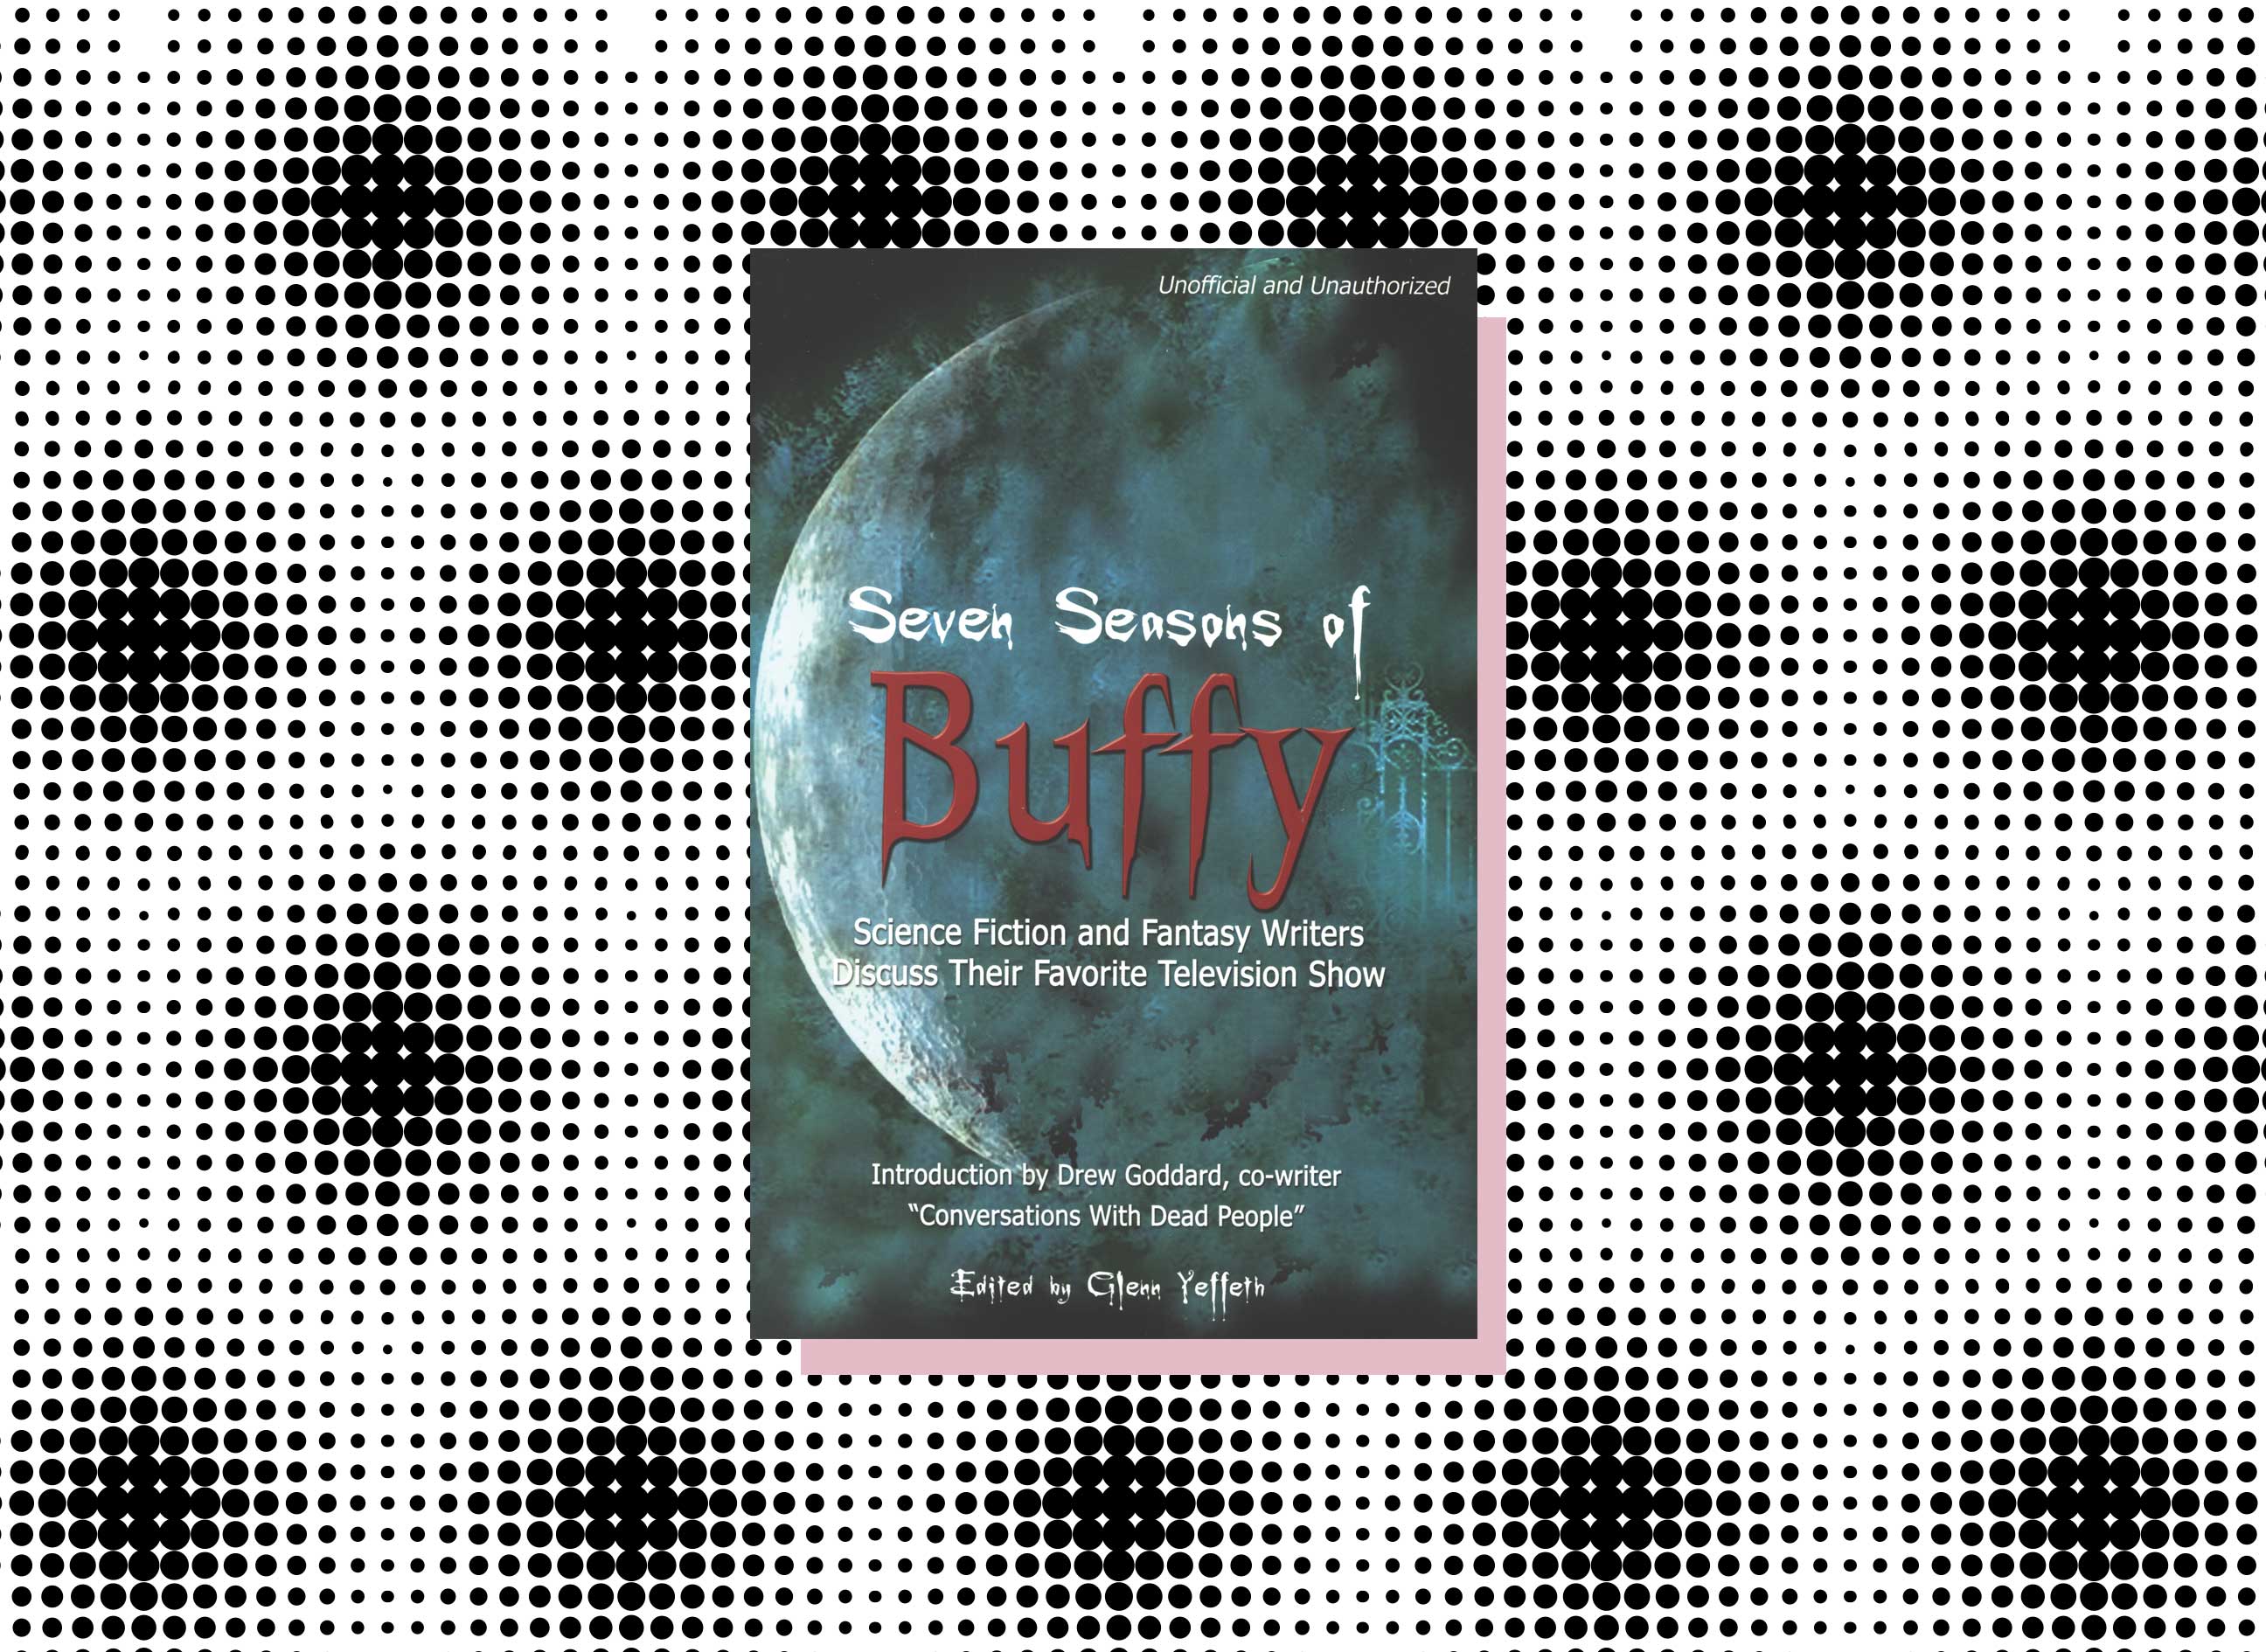 Seven Seasons of Buffy cover